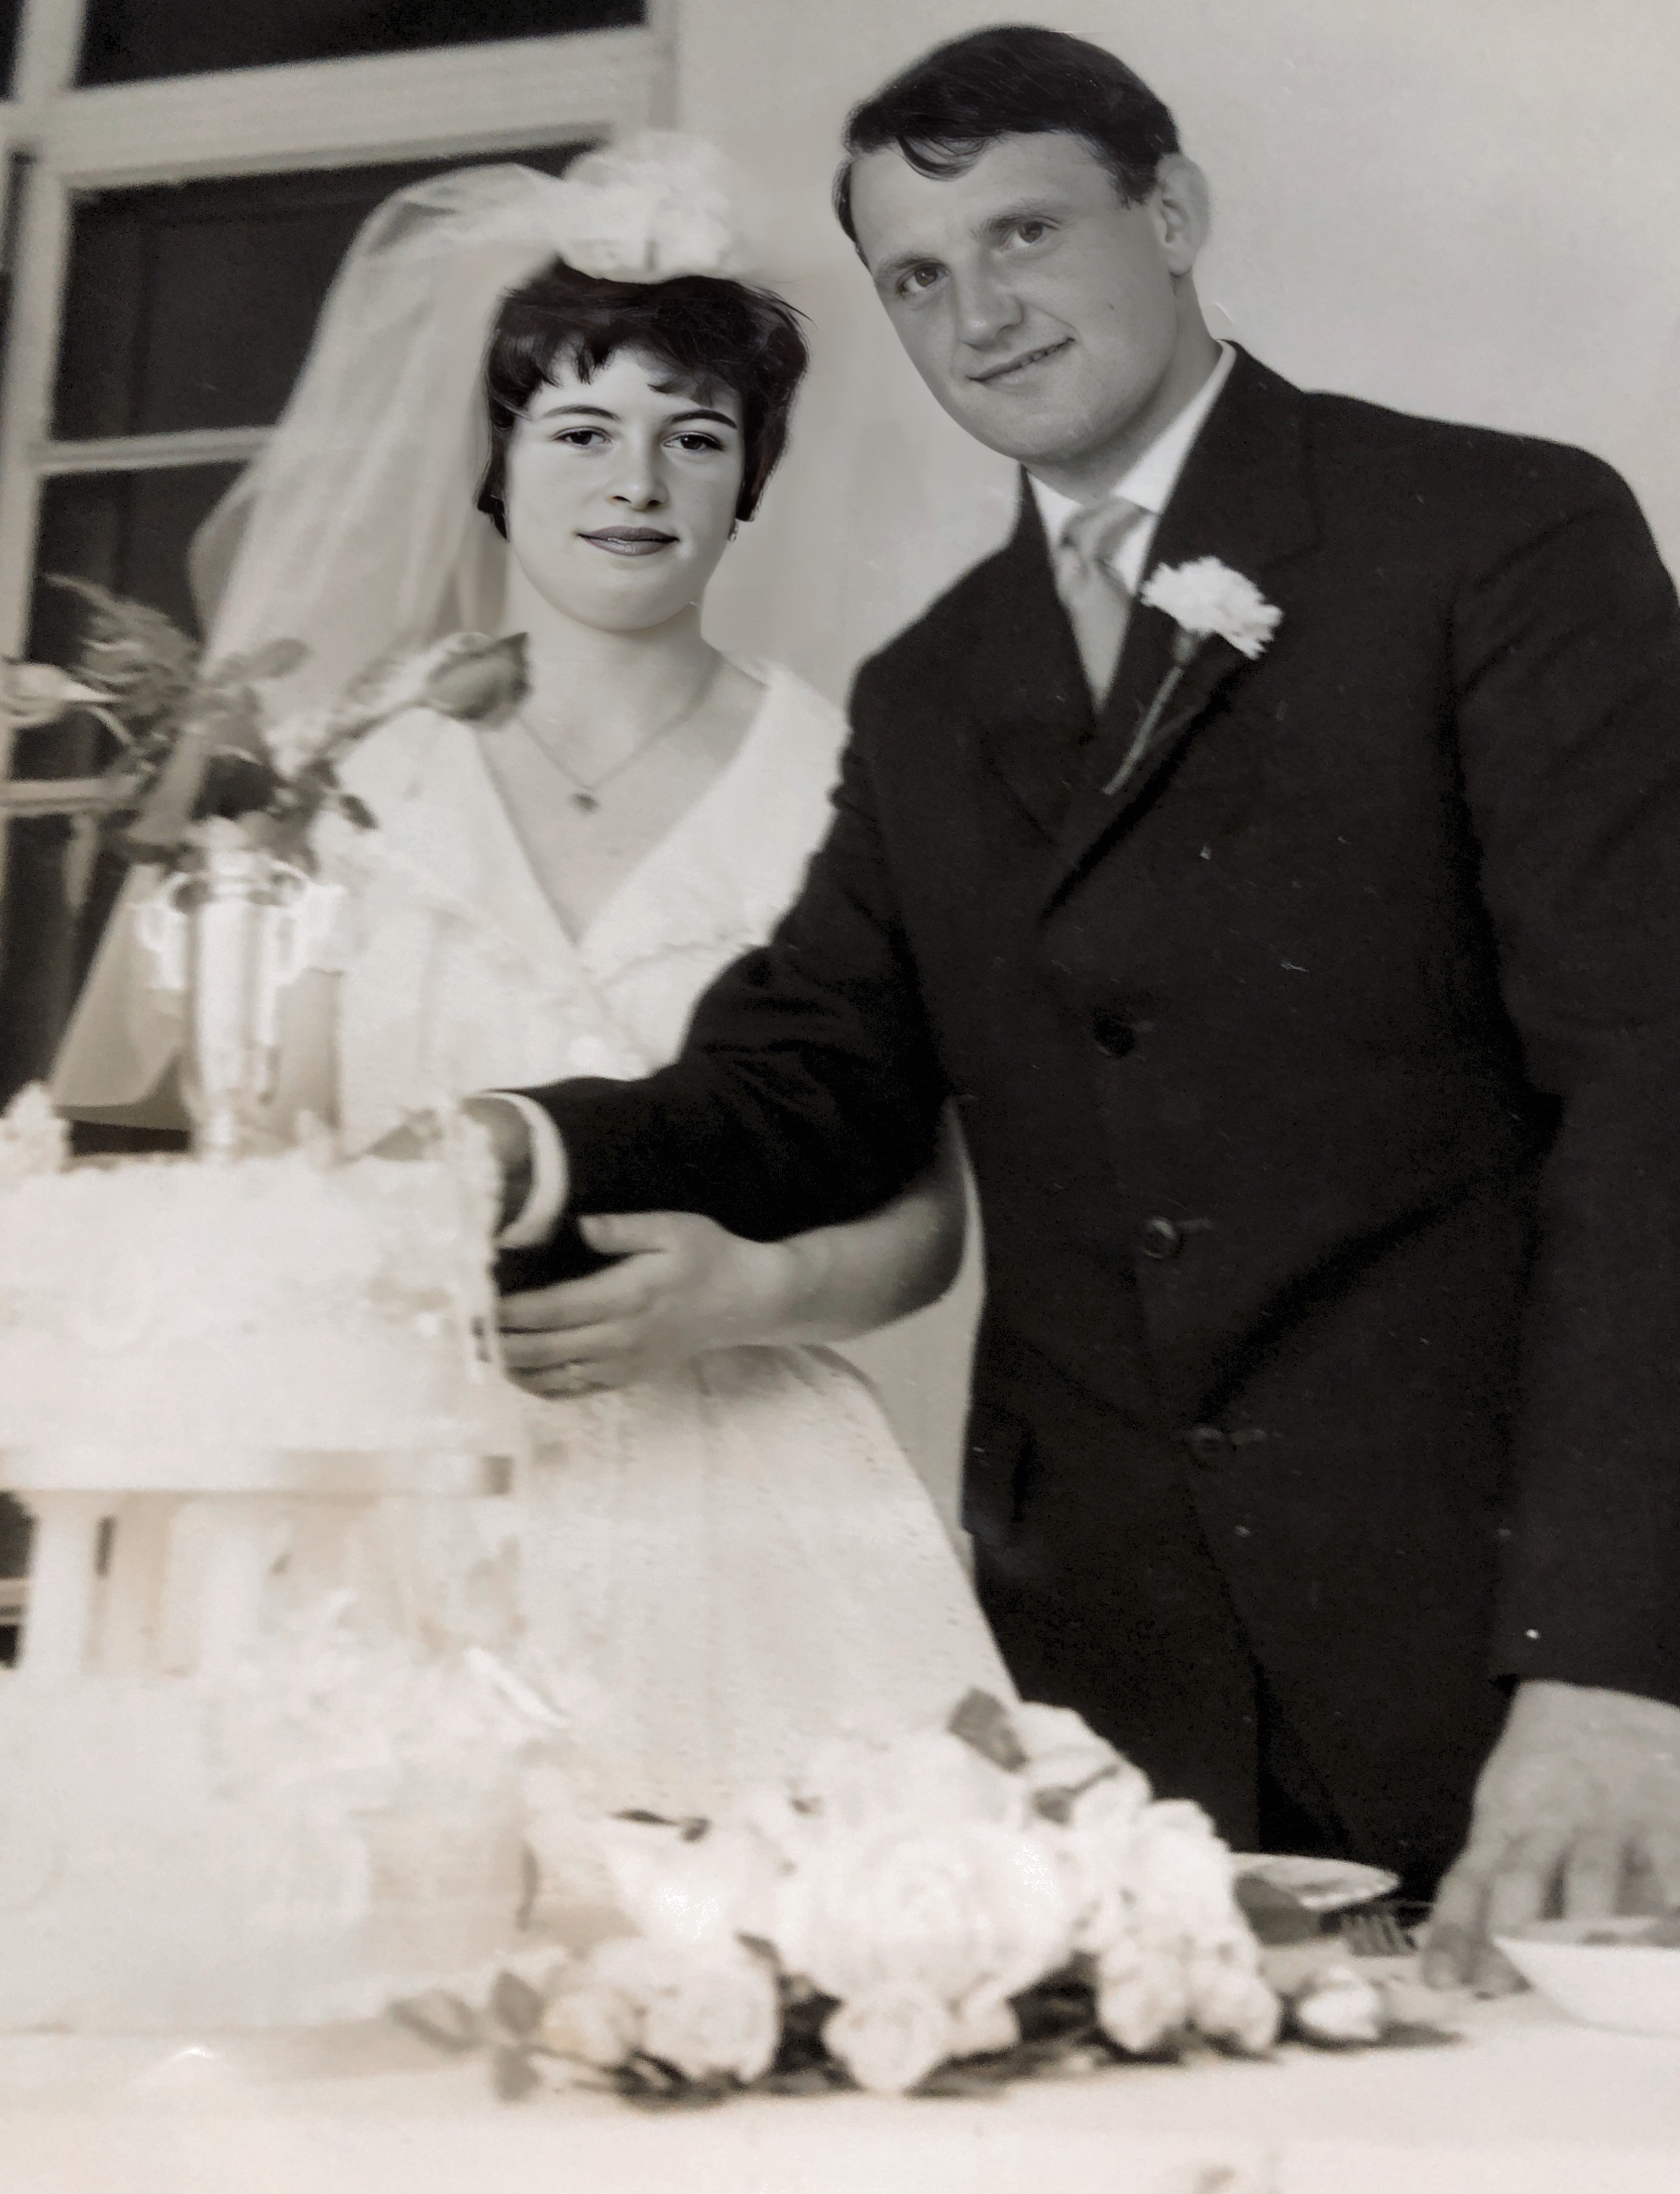 Wedding day 13 January 1961